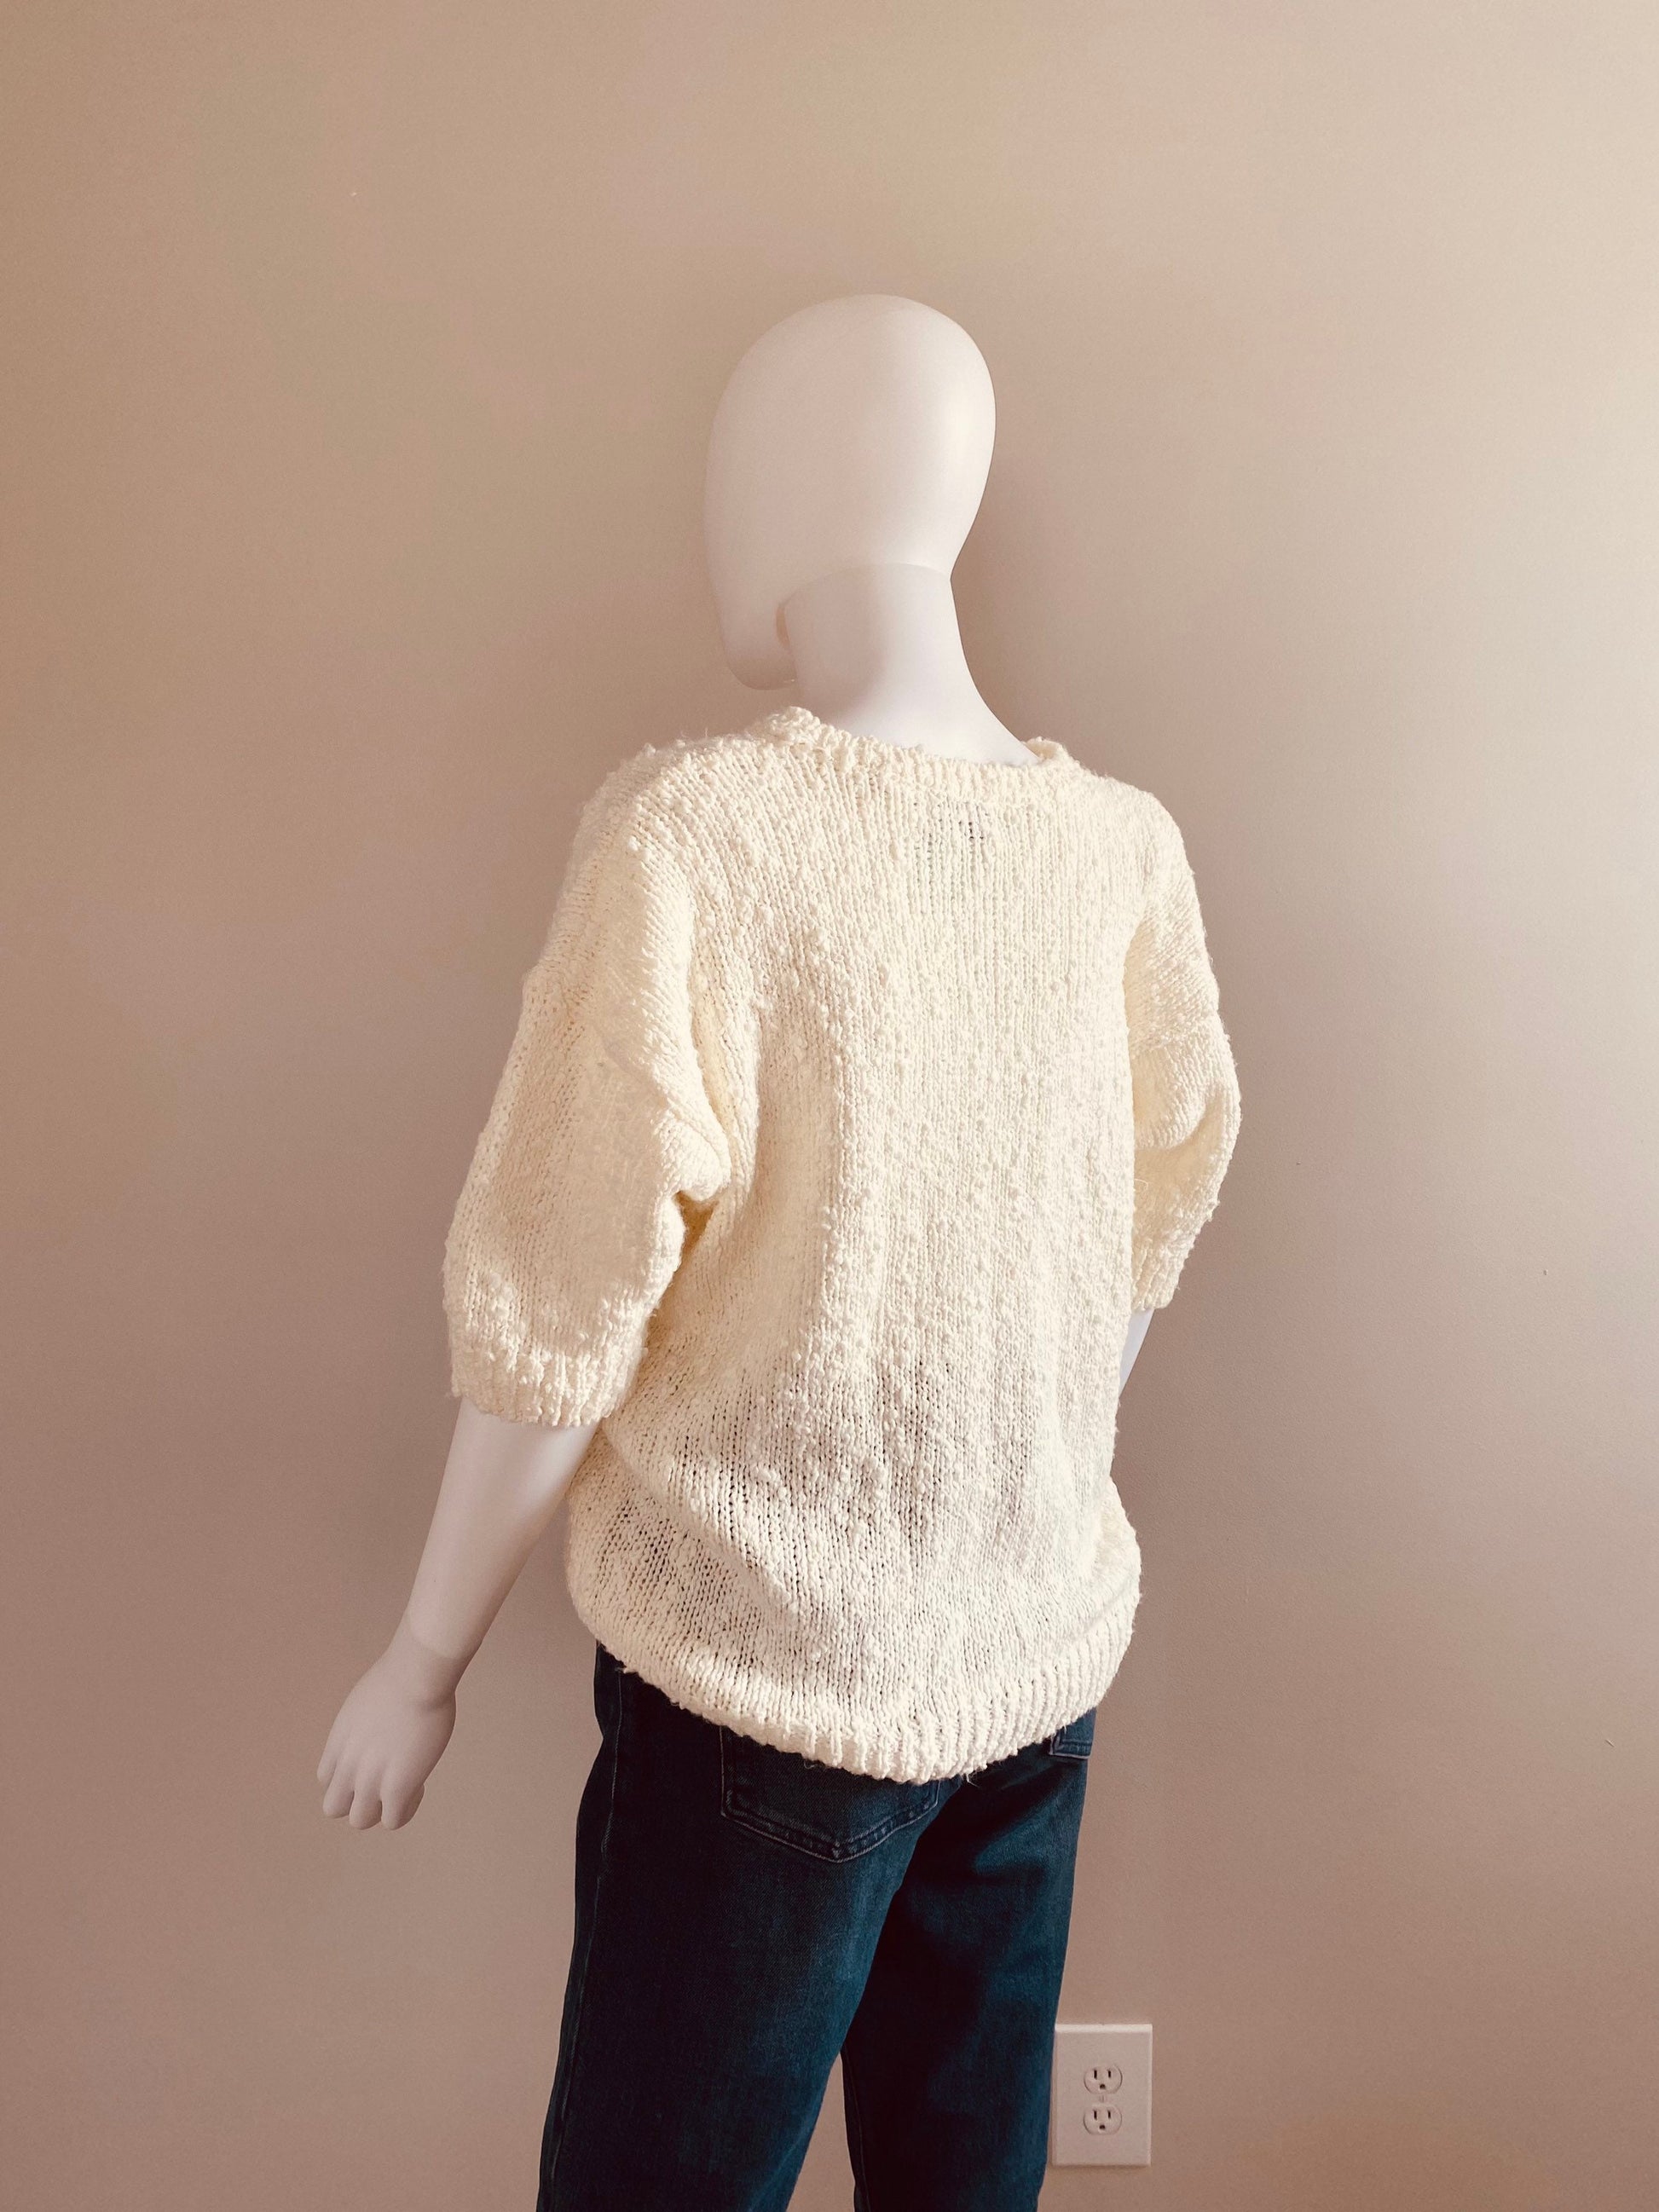 Vintage 1980s Cream Bouclé Sweater with Floral Appliqué / 80s short sleeve sweater / 80s cotton sweater / Size S to L